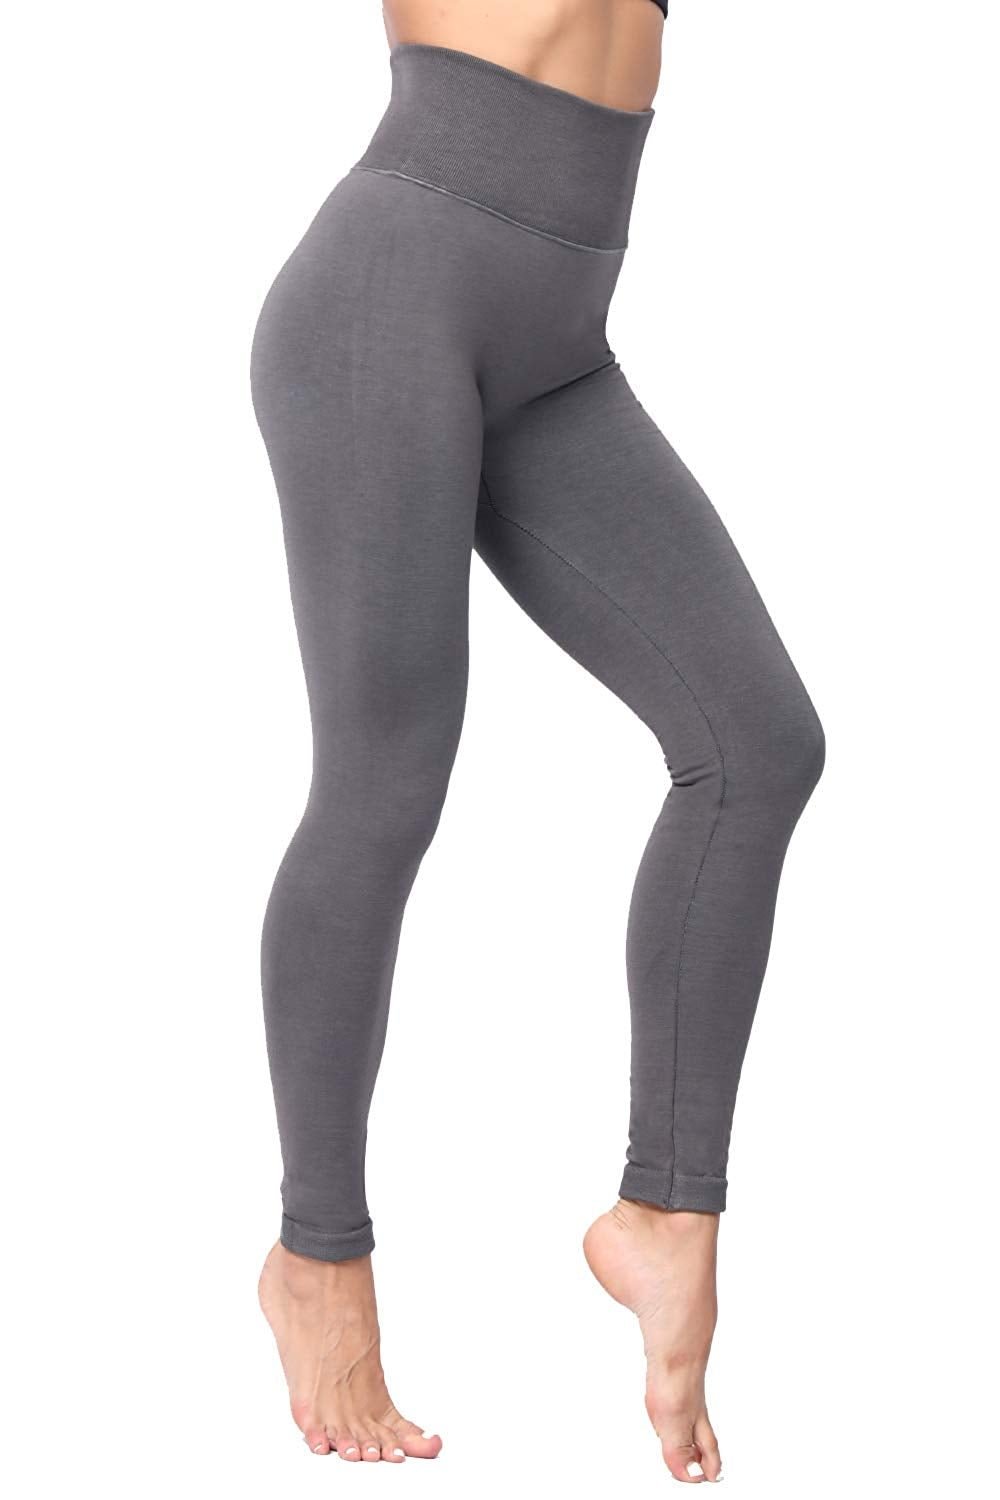 Women'sHigh Waist Tummy Control Leggings Winter Warm Fleece Lined Seamless Thick Pants